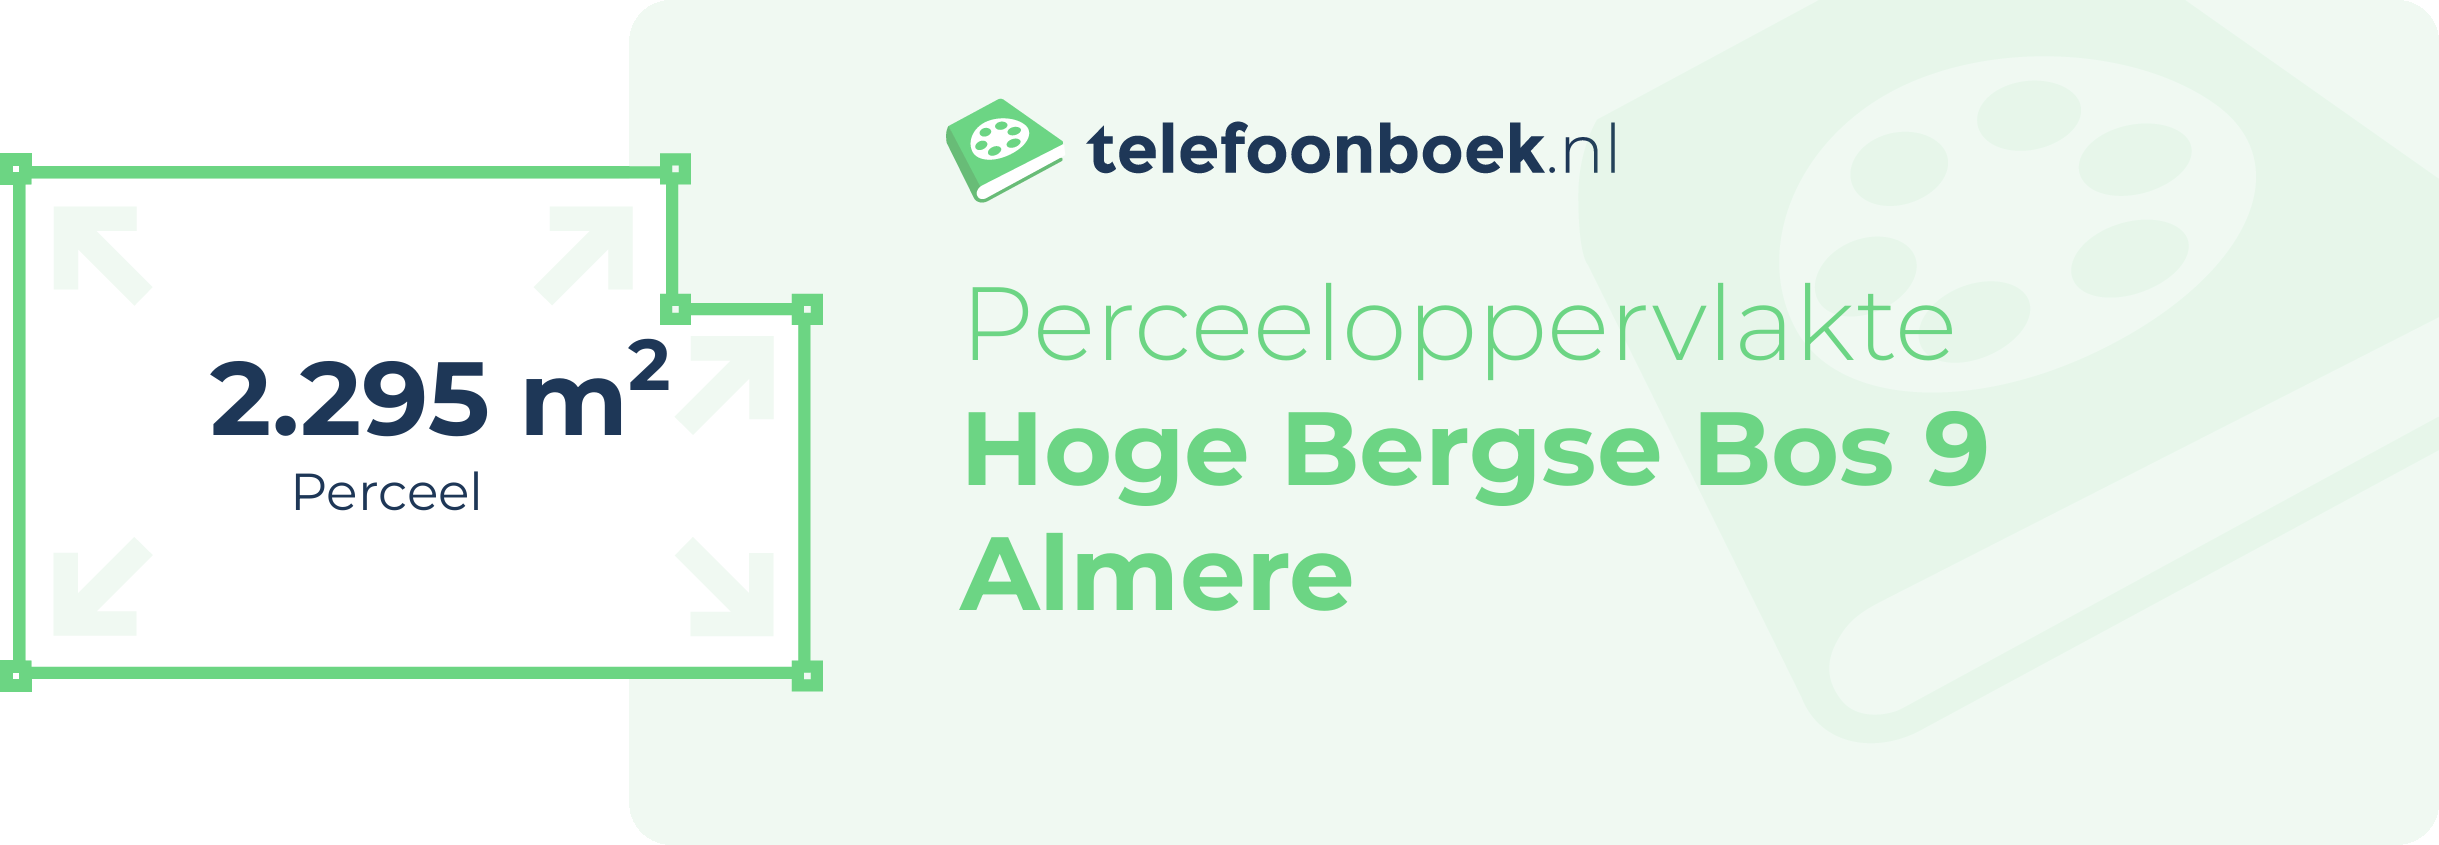 Perceeloppervlakte Hoge Bergse Bos 9 Almere